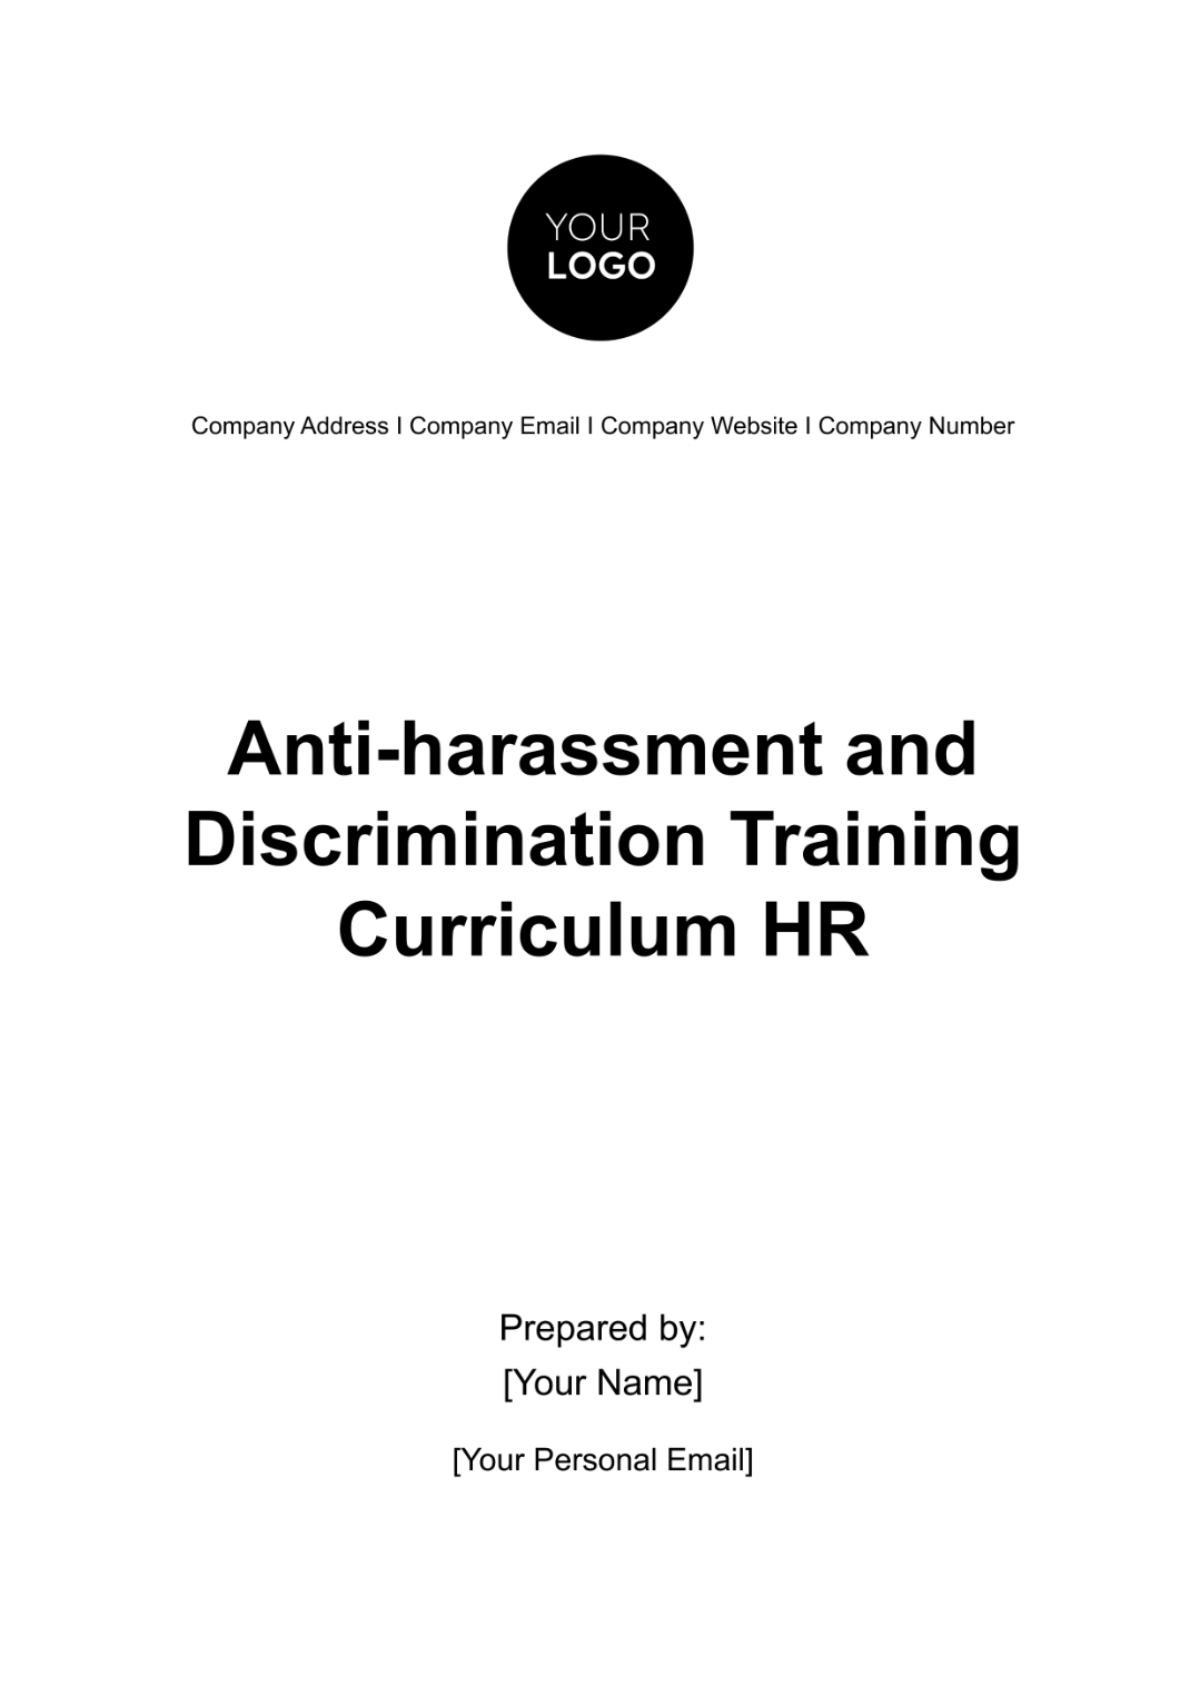 Anti-harassment and Discrimination Training Curriculum HR Template